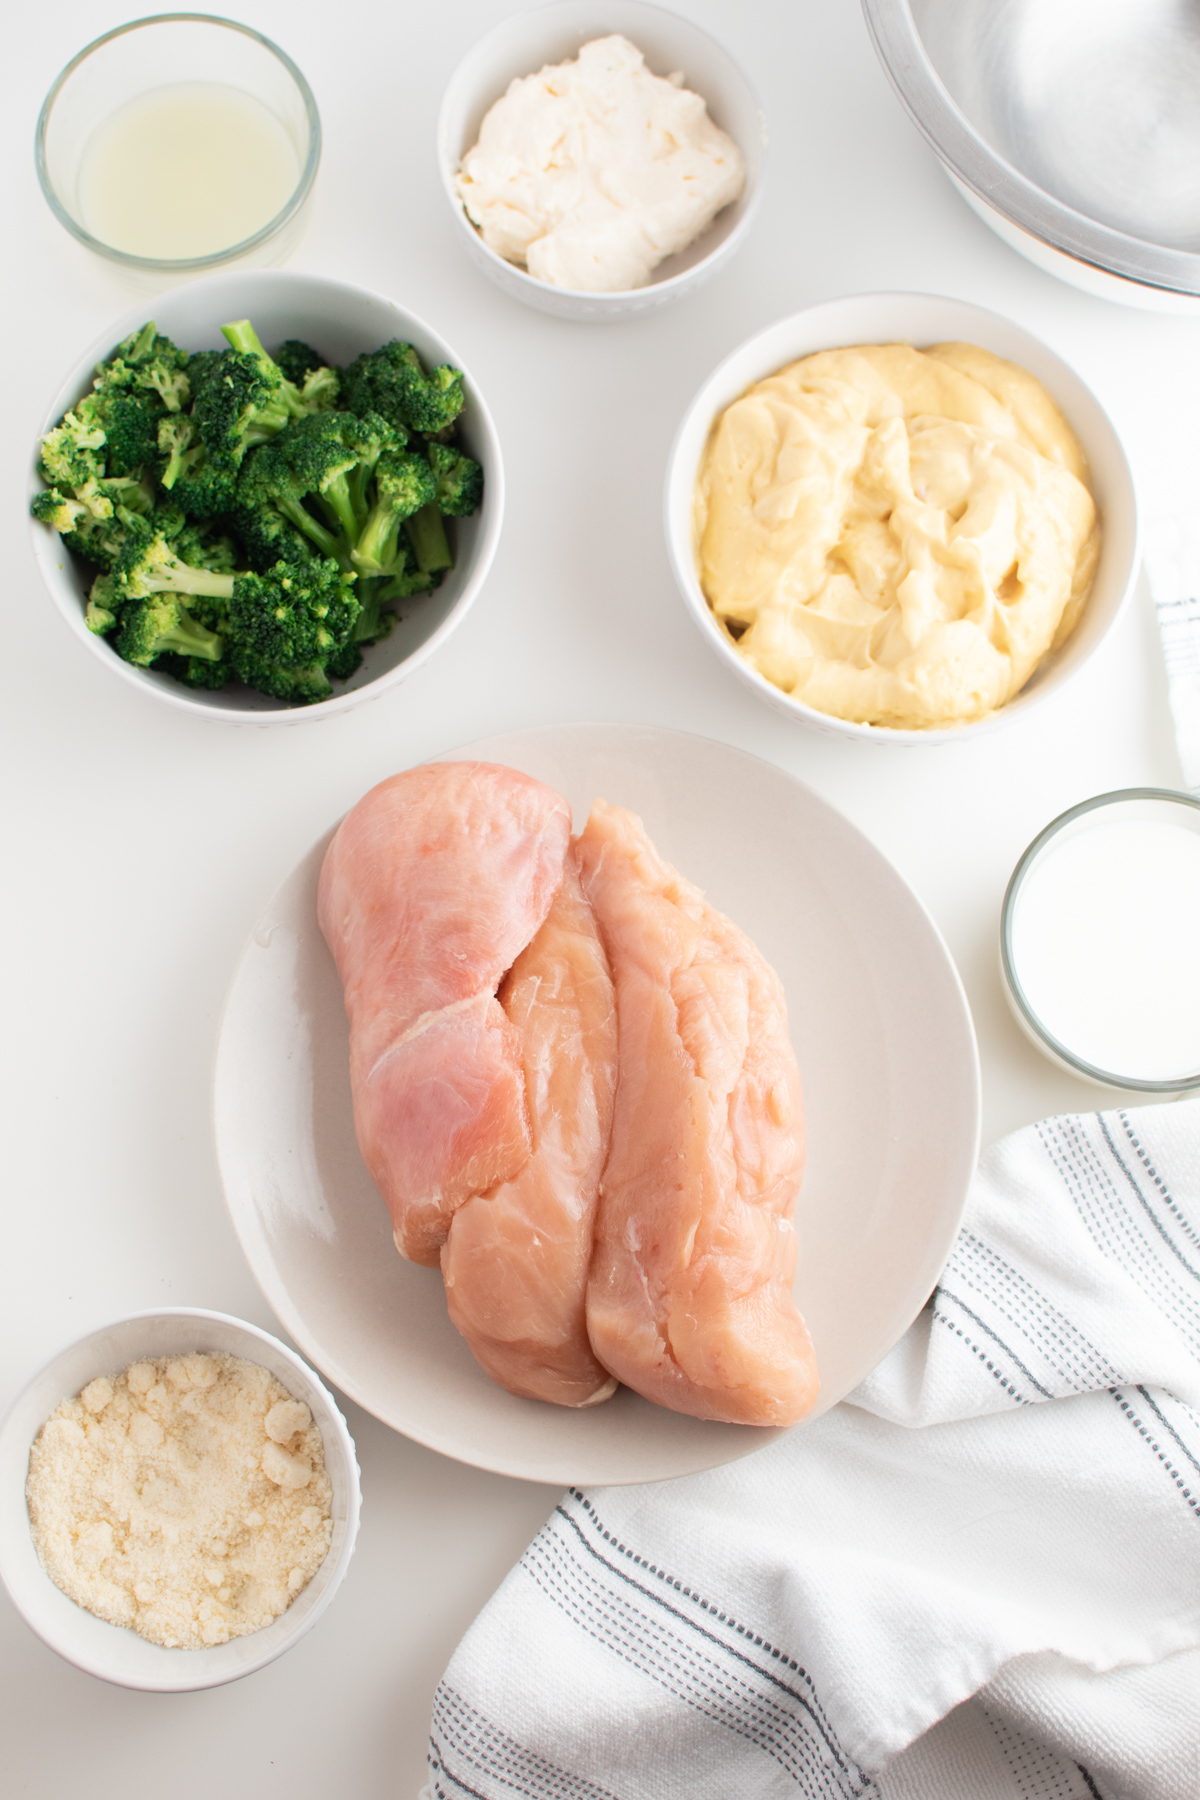 Chicken broccoli casserole ingredients including chicken breasts, cream of chicken soup and broccoli.